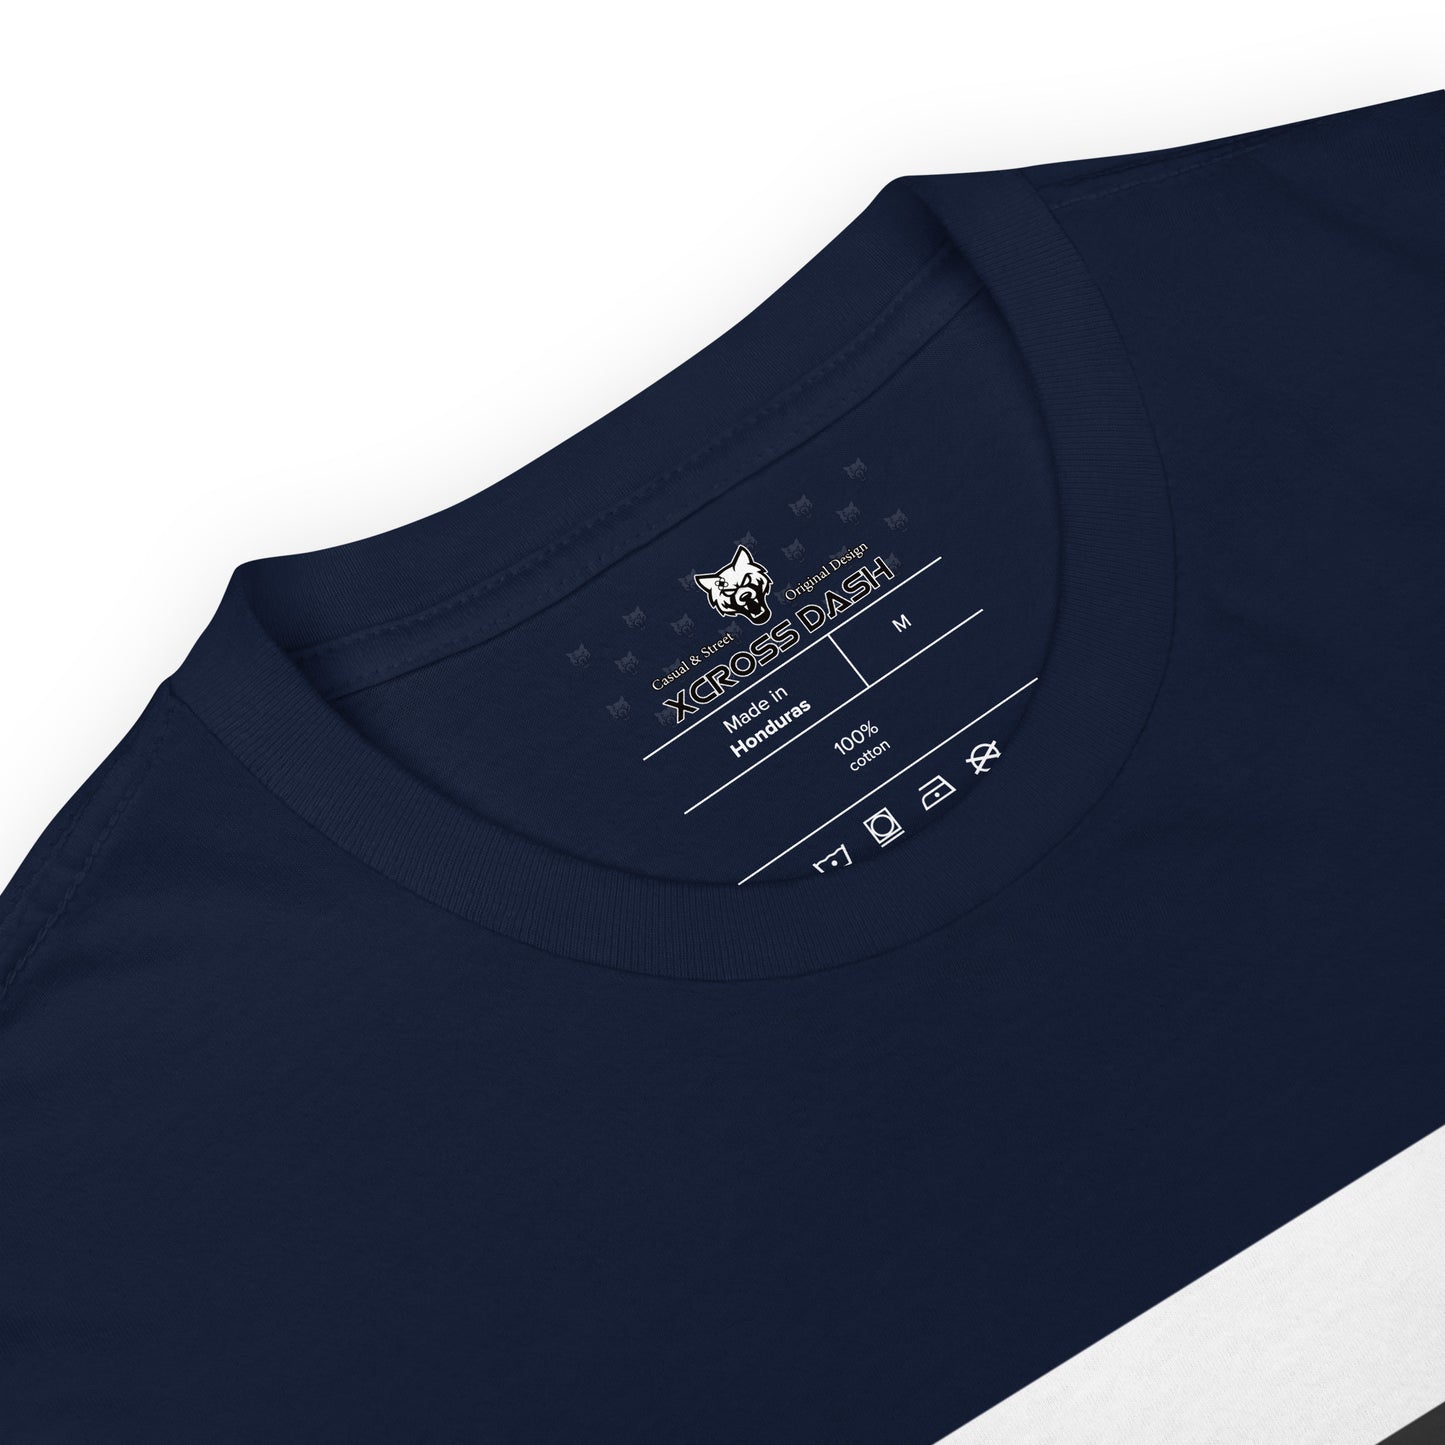 XCROSS DASH 2022 ORIGINAL DSGN  "Short-Sleeve Unisex T-Shirt" #0719PF